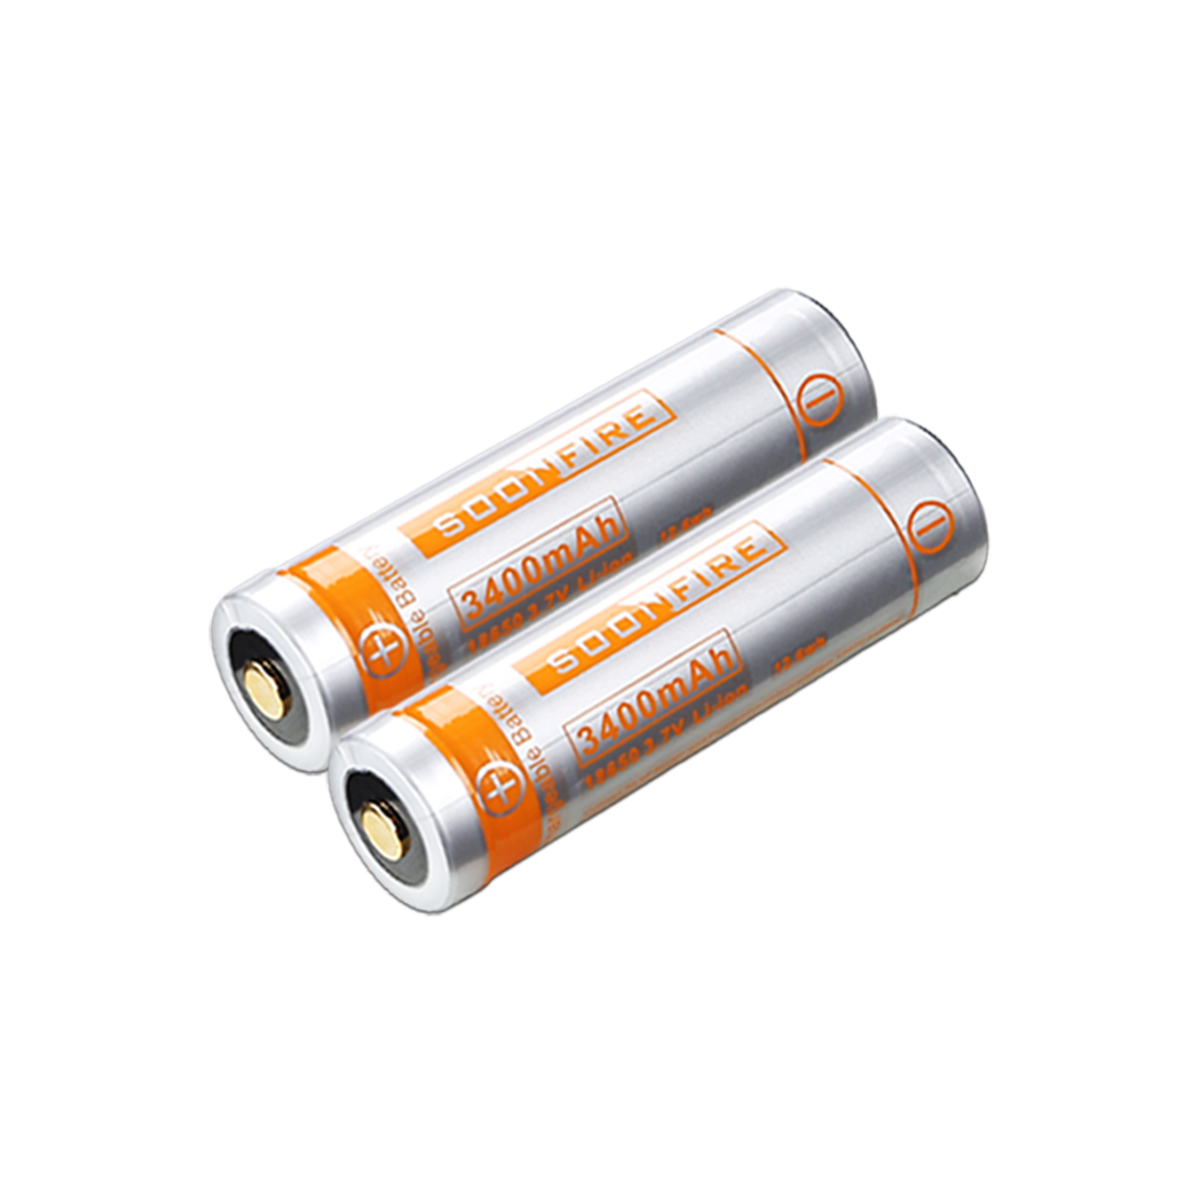 Soonfire 18650 Li-ion Recharger Batteries(two)